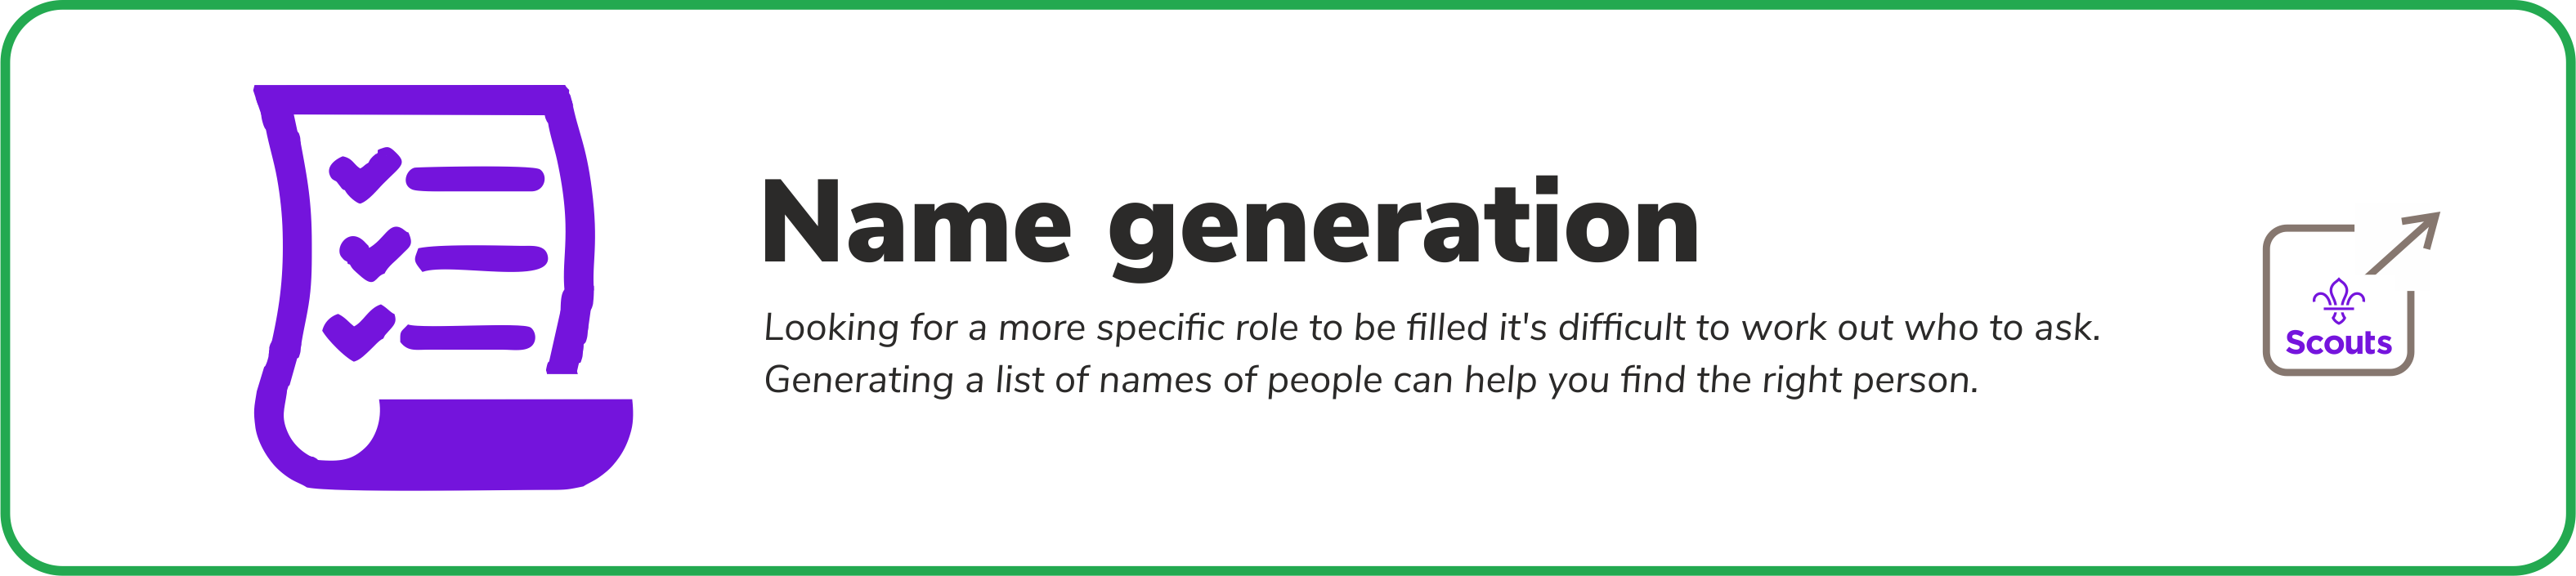 Name generation 